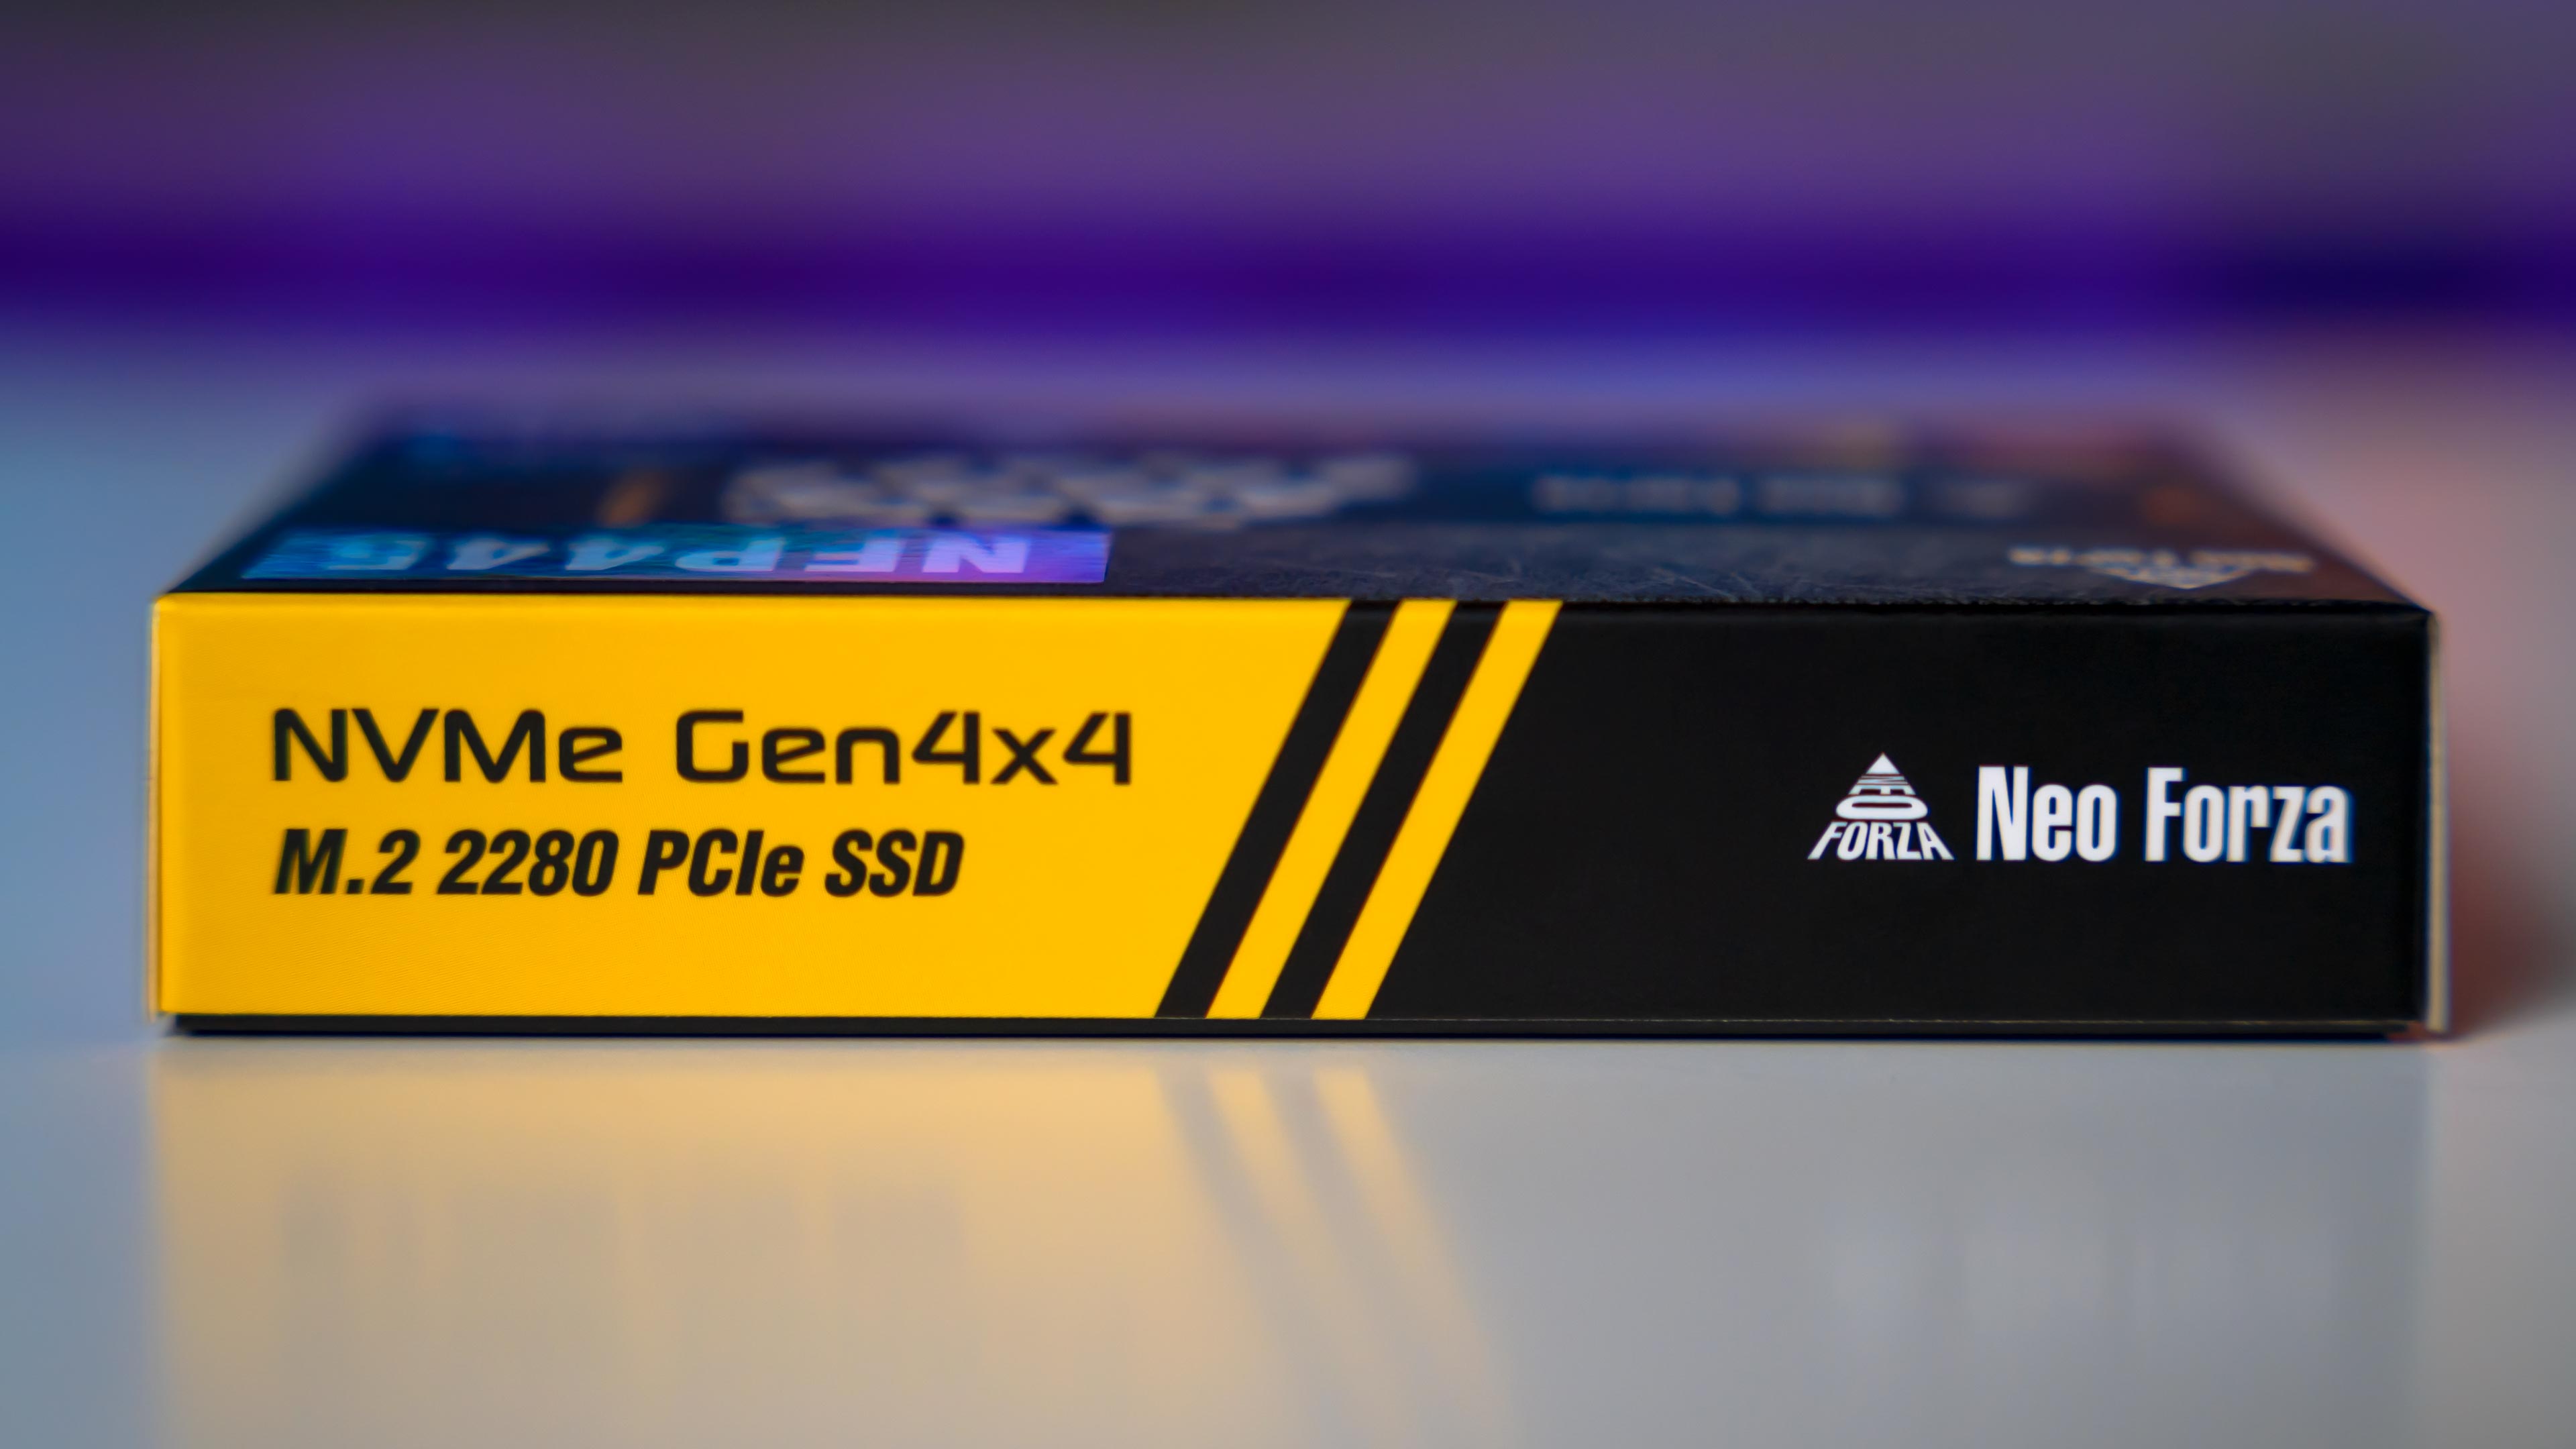 Neo Forza NFP445 1TB Gen4 Box (4)